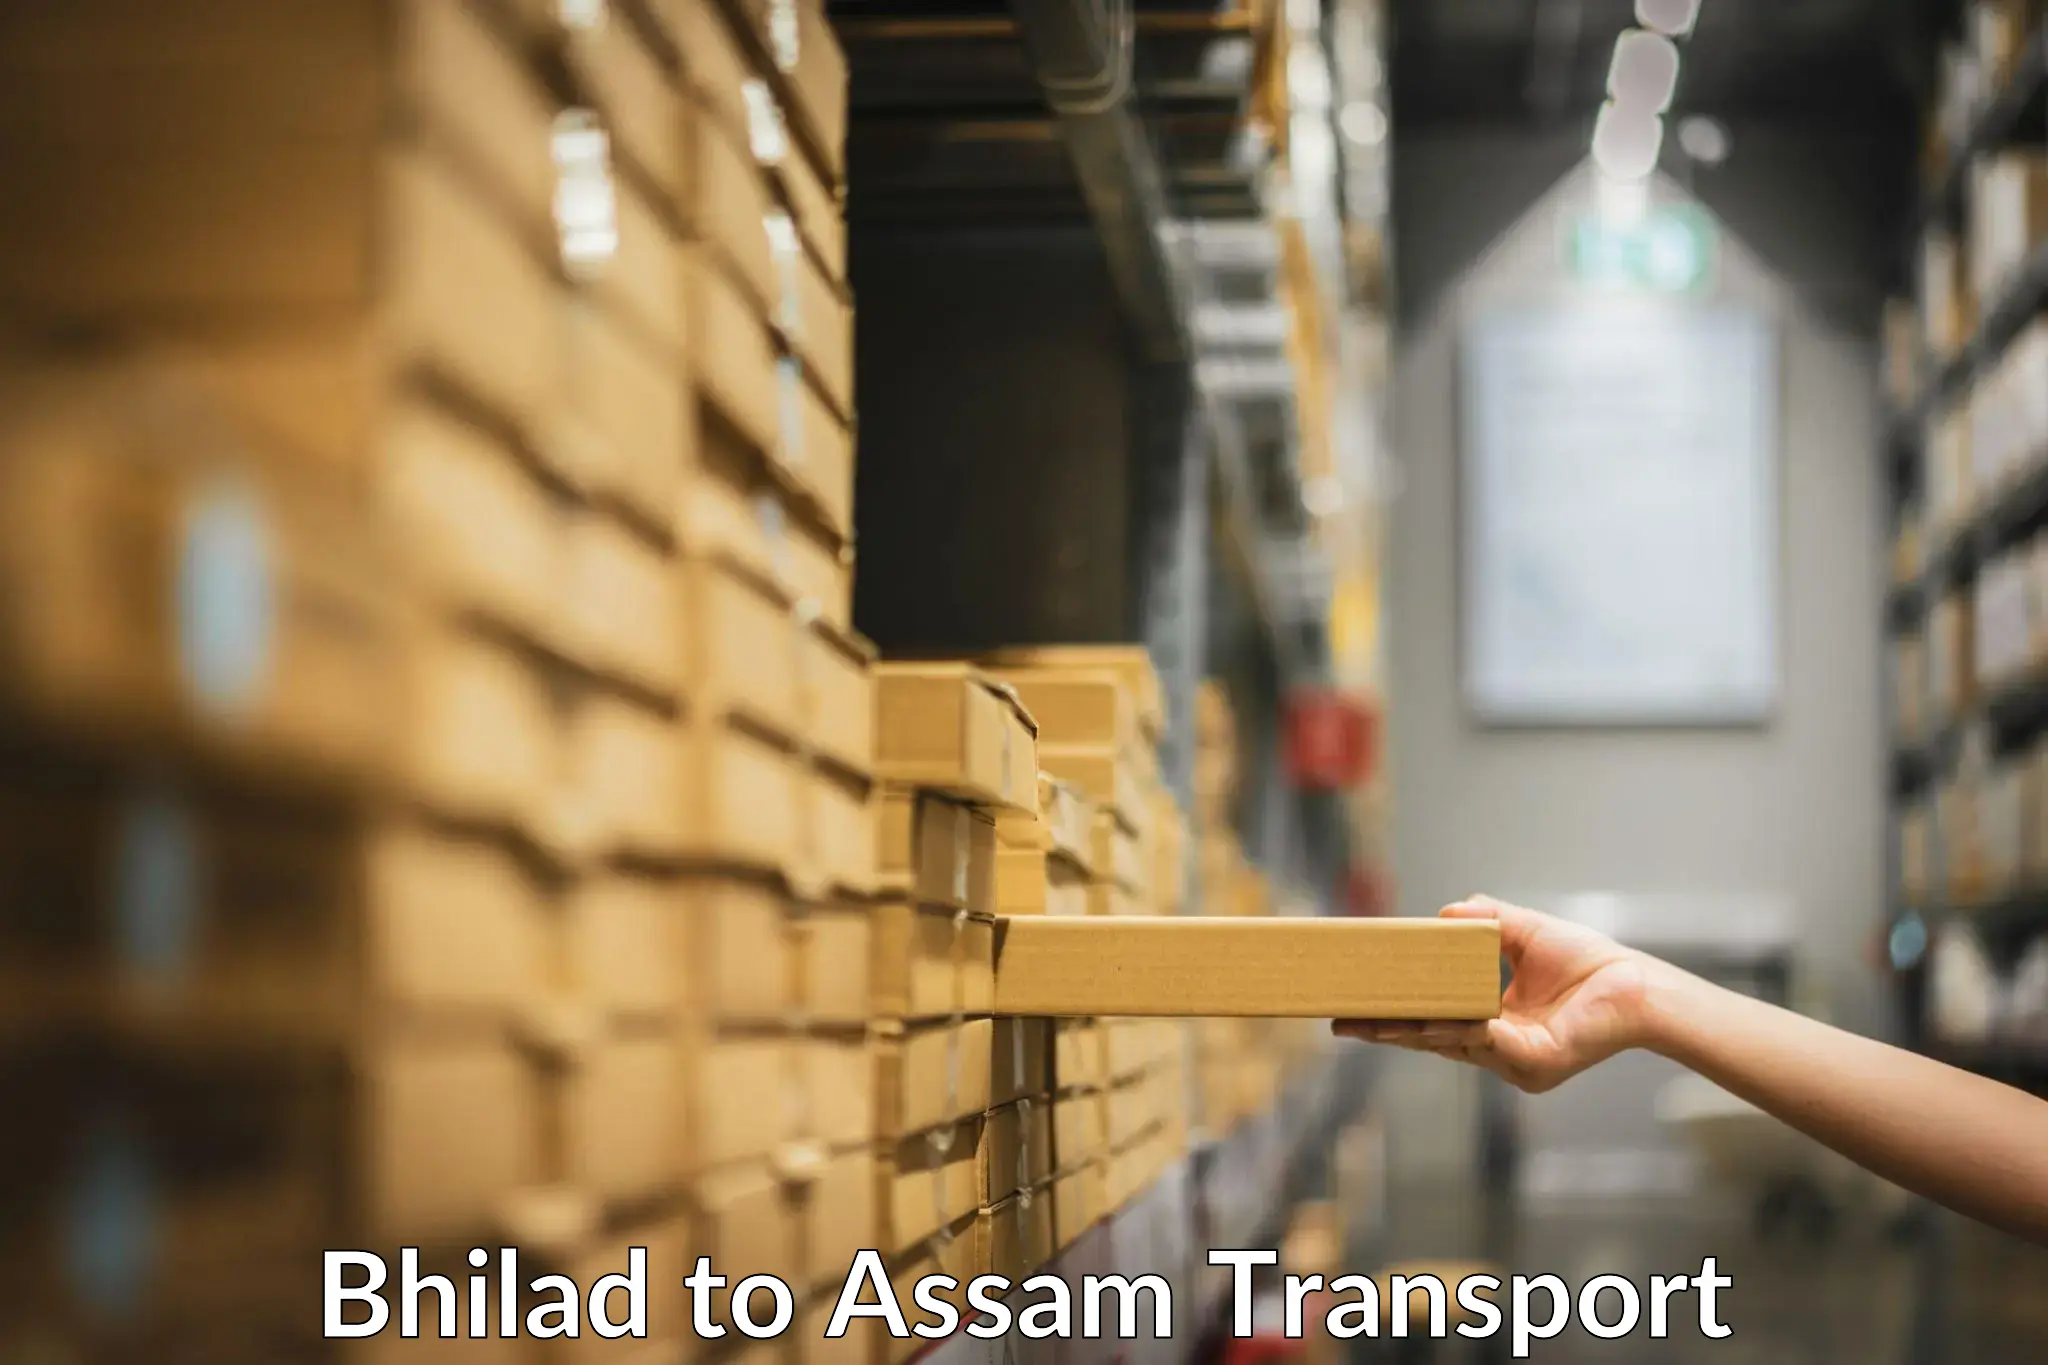 Truck transport companies in India Bhilad to Assam